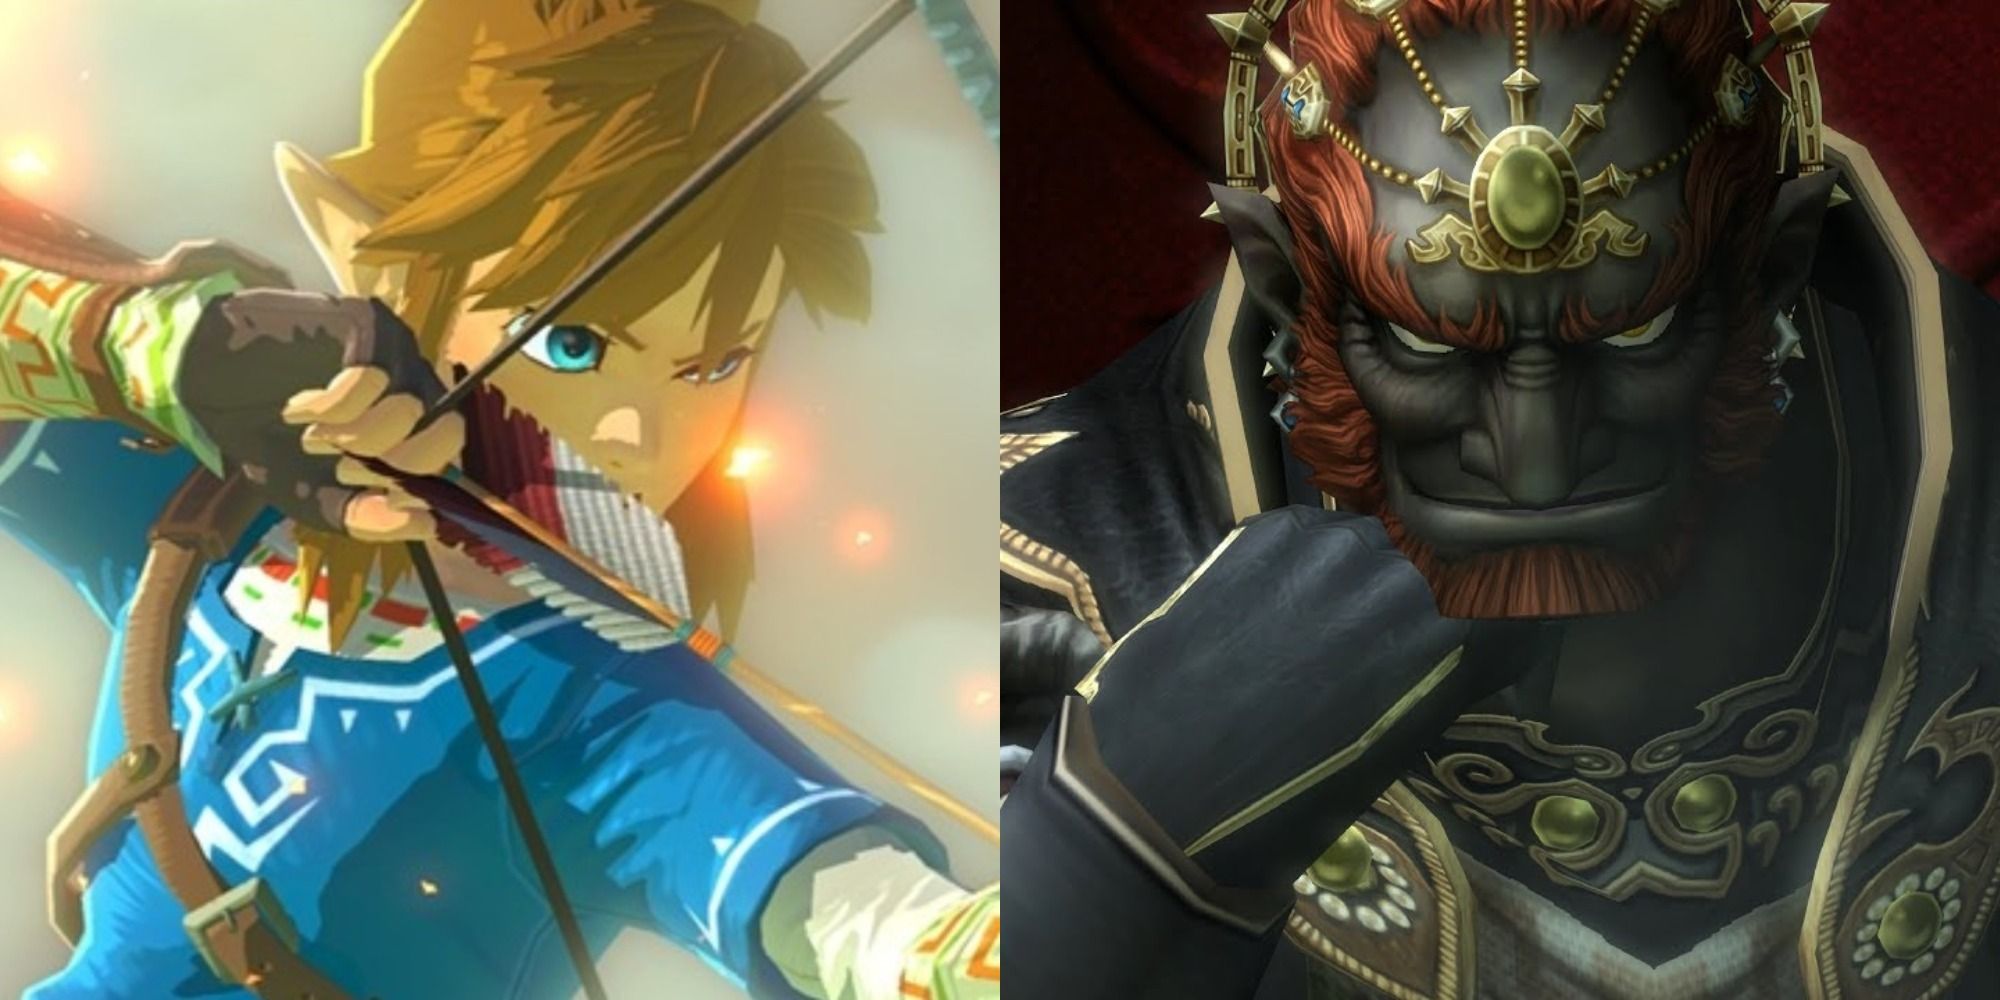 Side by Side images of Link and Ganondorf from Legend of Zelda games